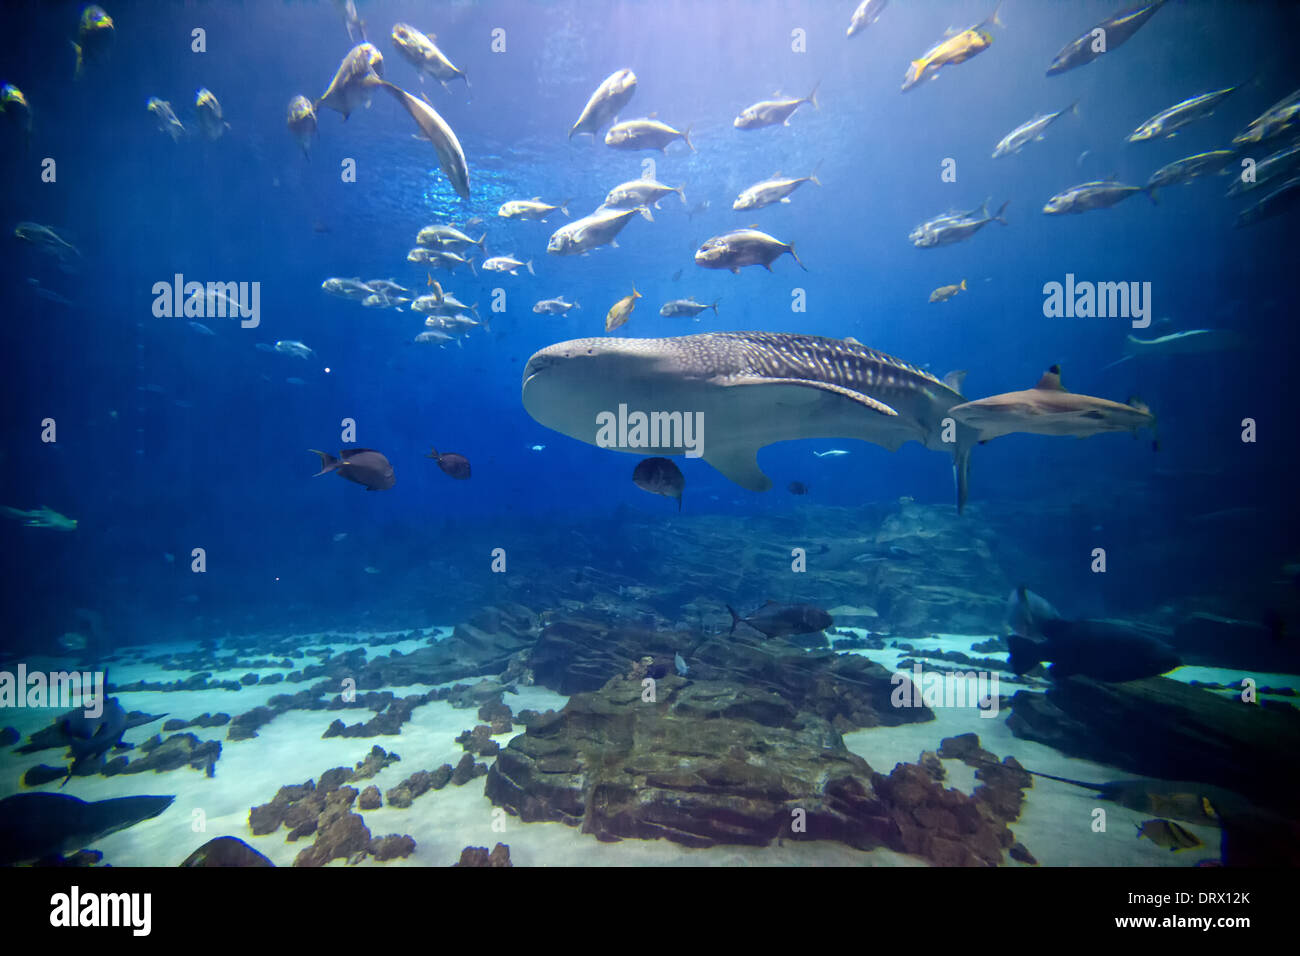 The main exhibit at Atlanta's Aquarium featuring numerous shark and fish of all kinds. Stock Photo